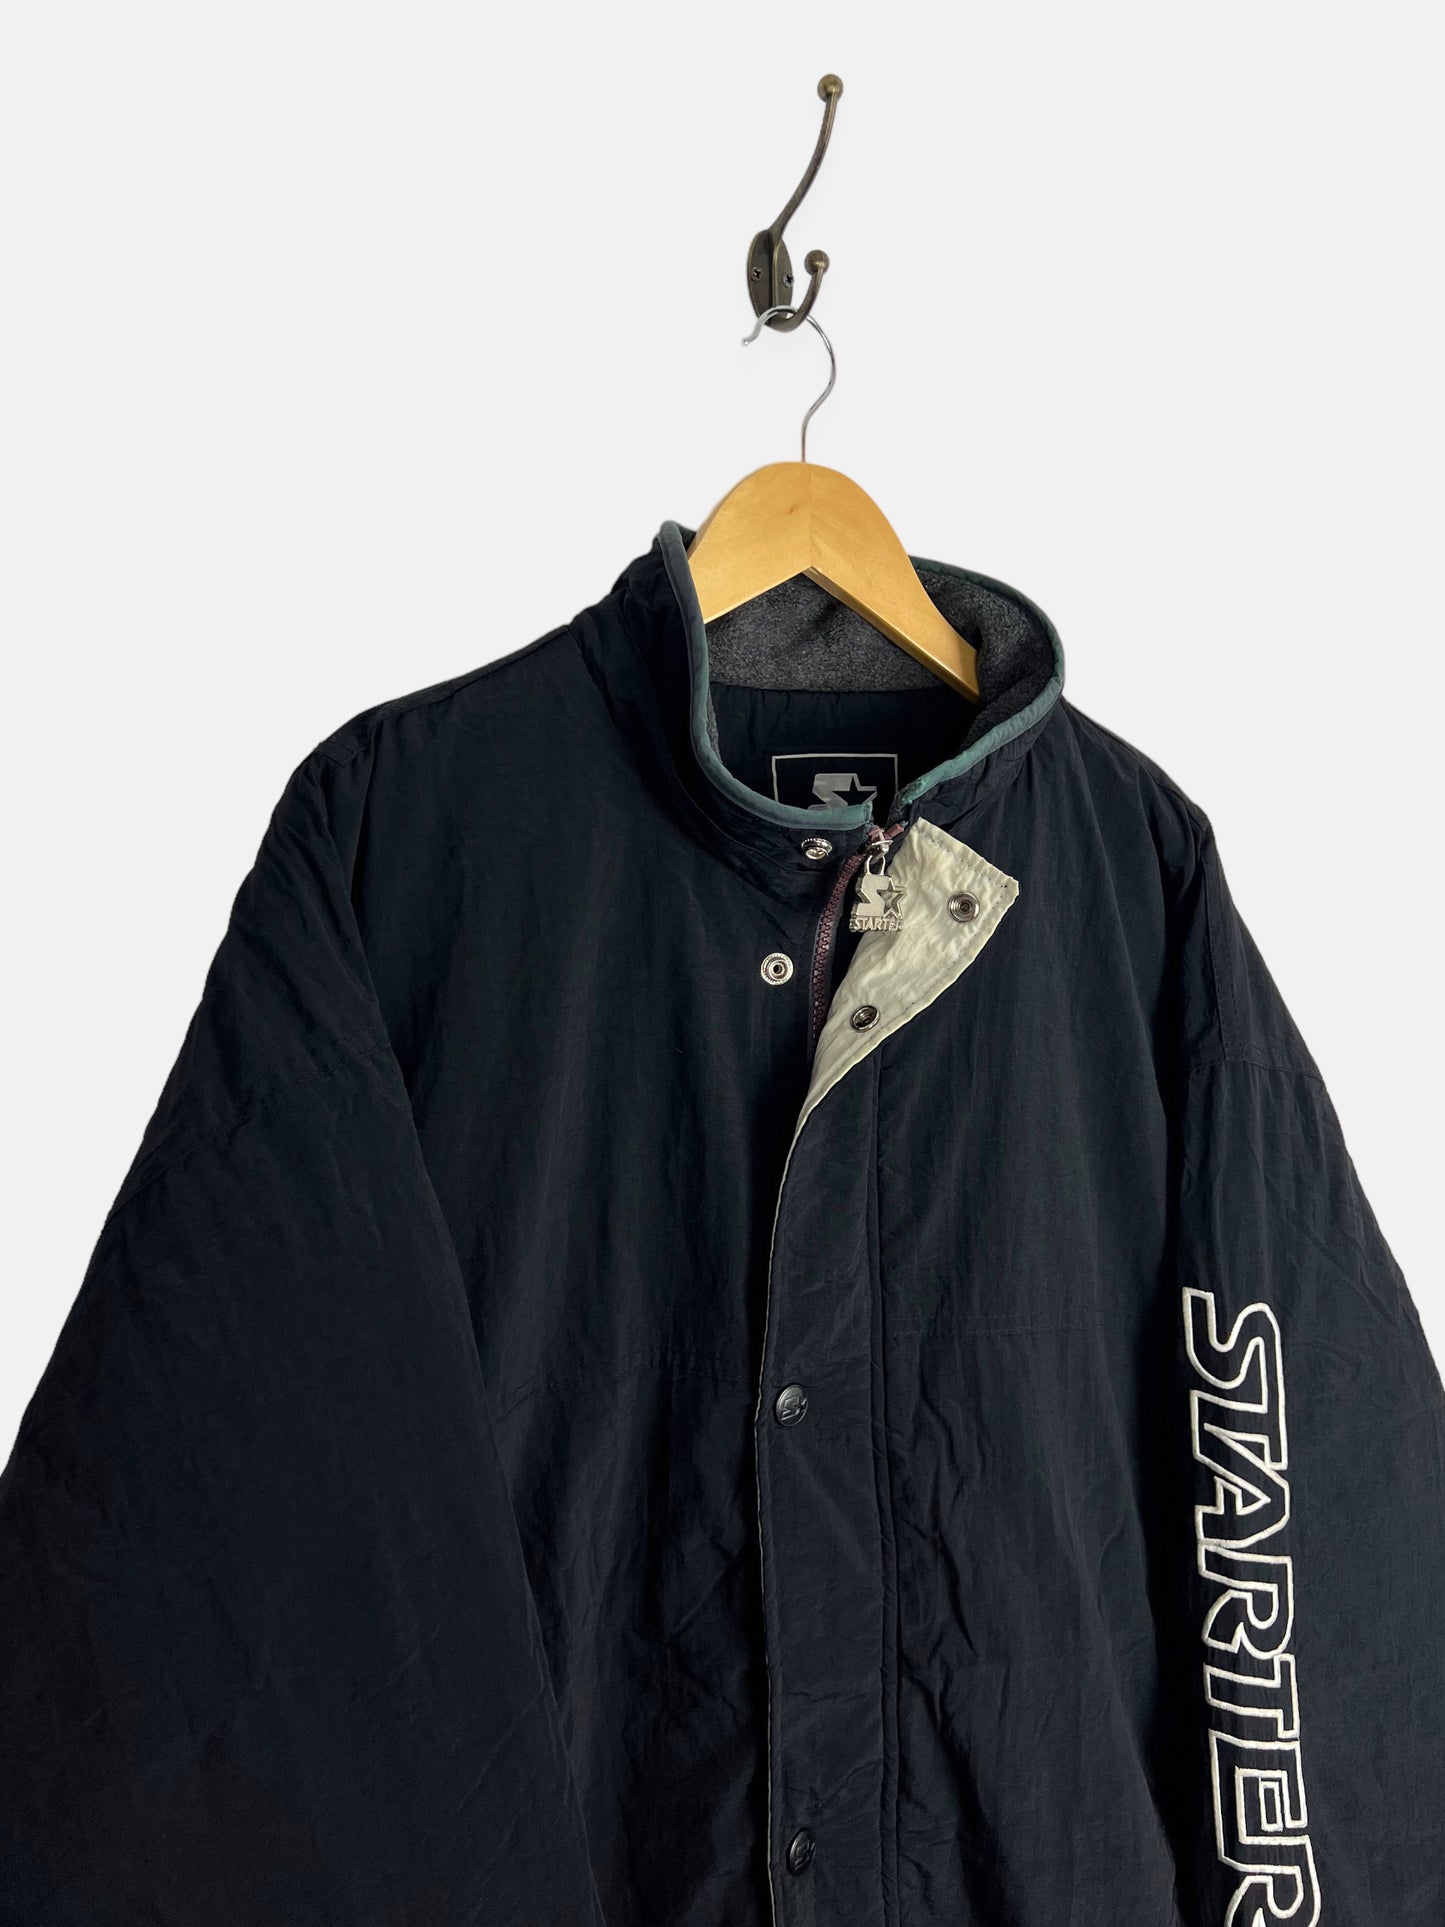 90's Starter Embroidered Fleece Lined Vintage Puffer Jacket Size XL